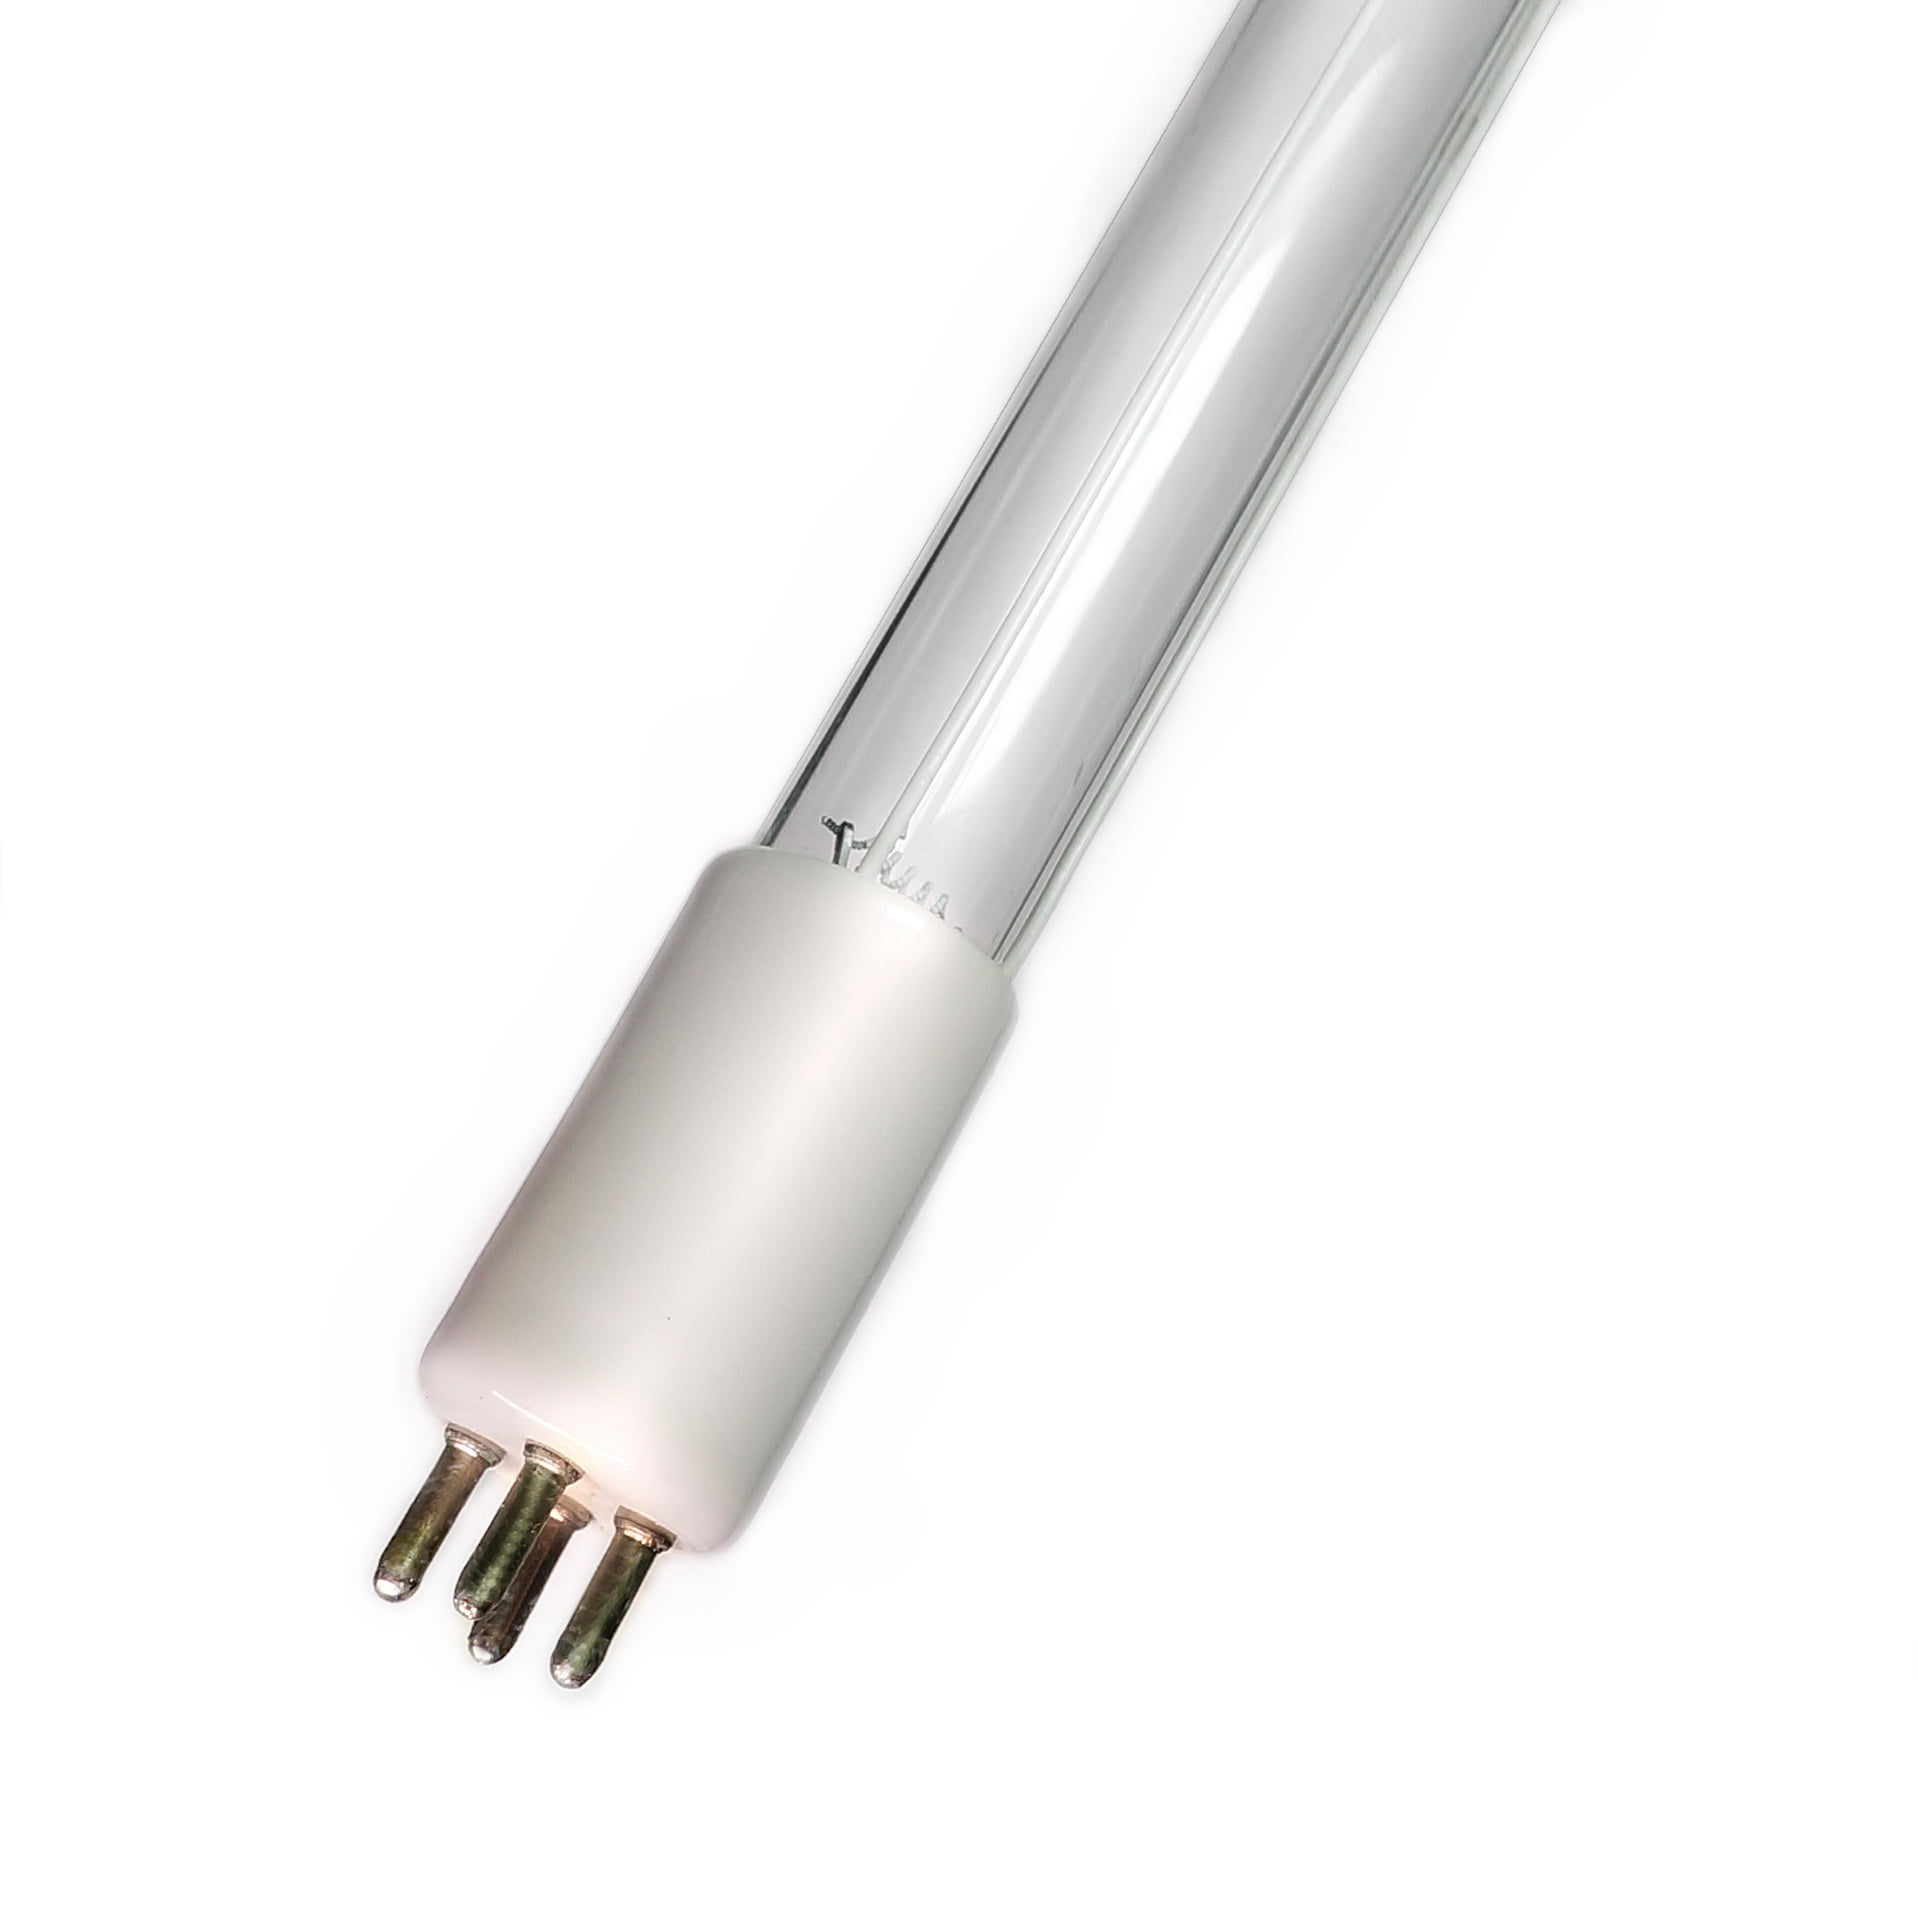 OEM Quality Premium Compatible Replacement Lamp Bulb .Guaranteed for One Year Pura Water 36002018 UV Lamp #20 for PURA UV20 /& UV BigBoy Series